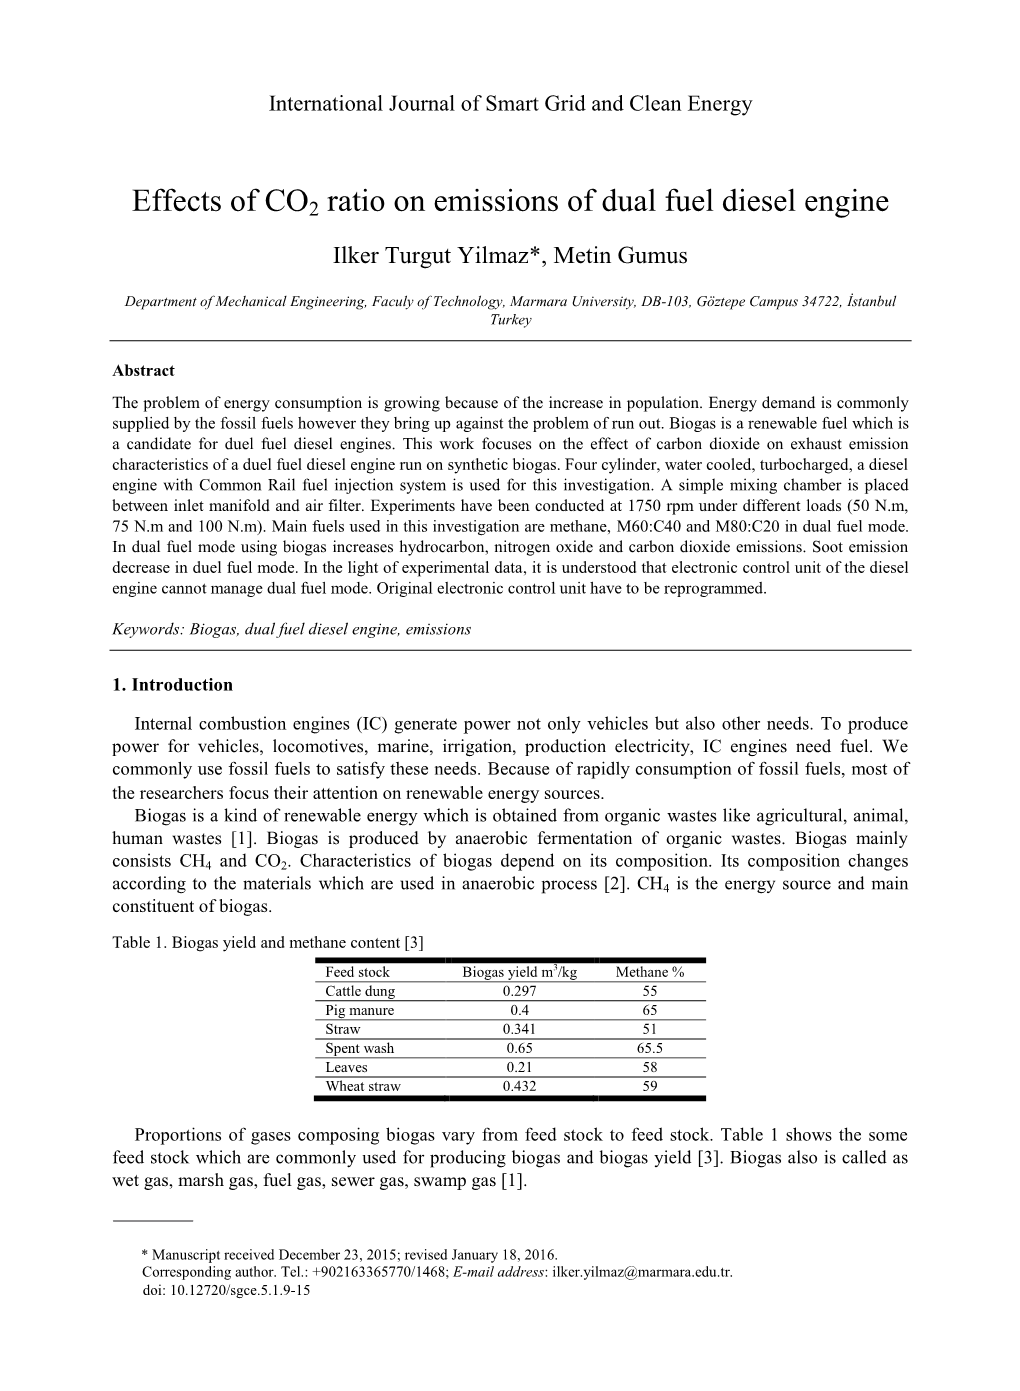 Effects of CO2 Ratio on Emissions of Dual Fuel Diesel Engine Ilker Turgut Yilmaz*, Metin Gumus